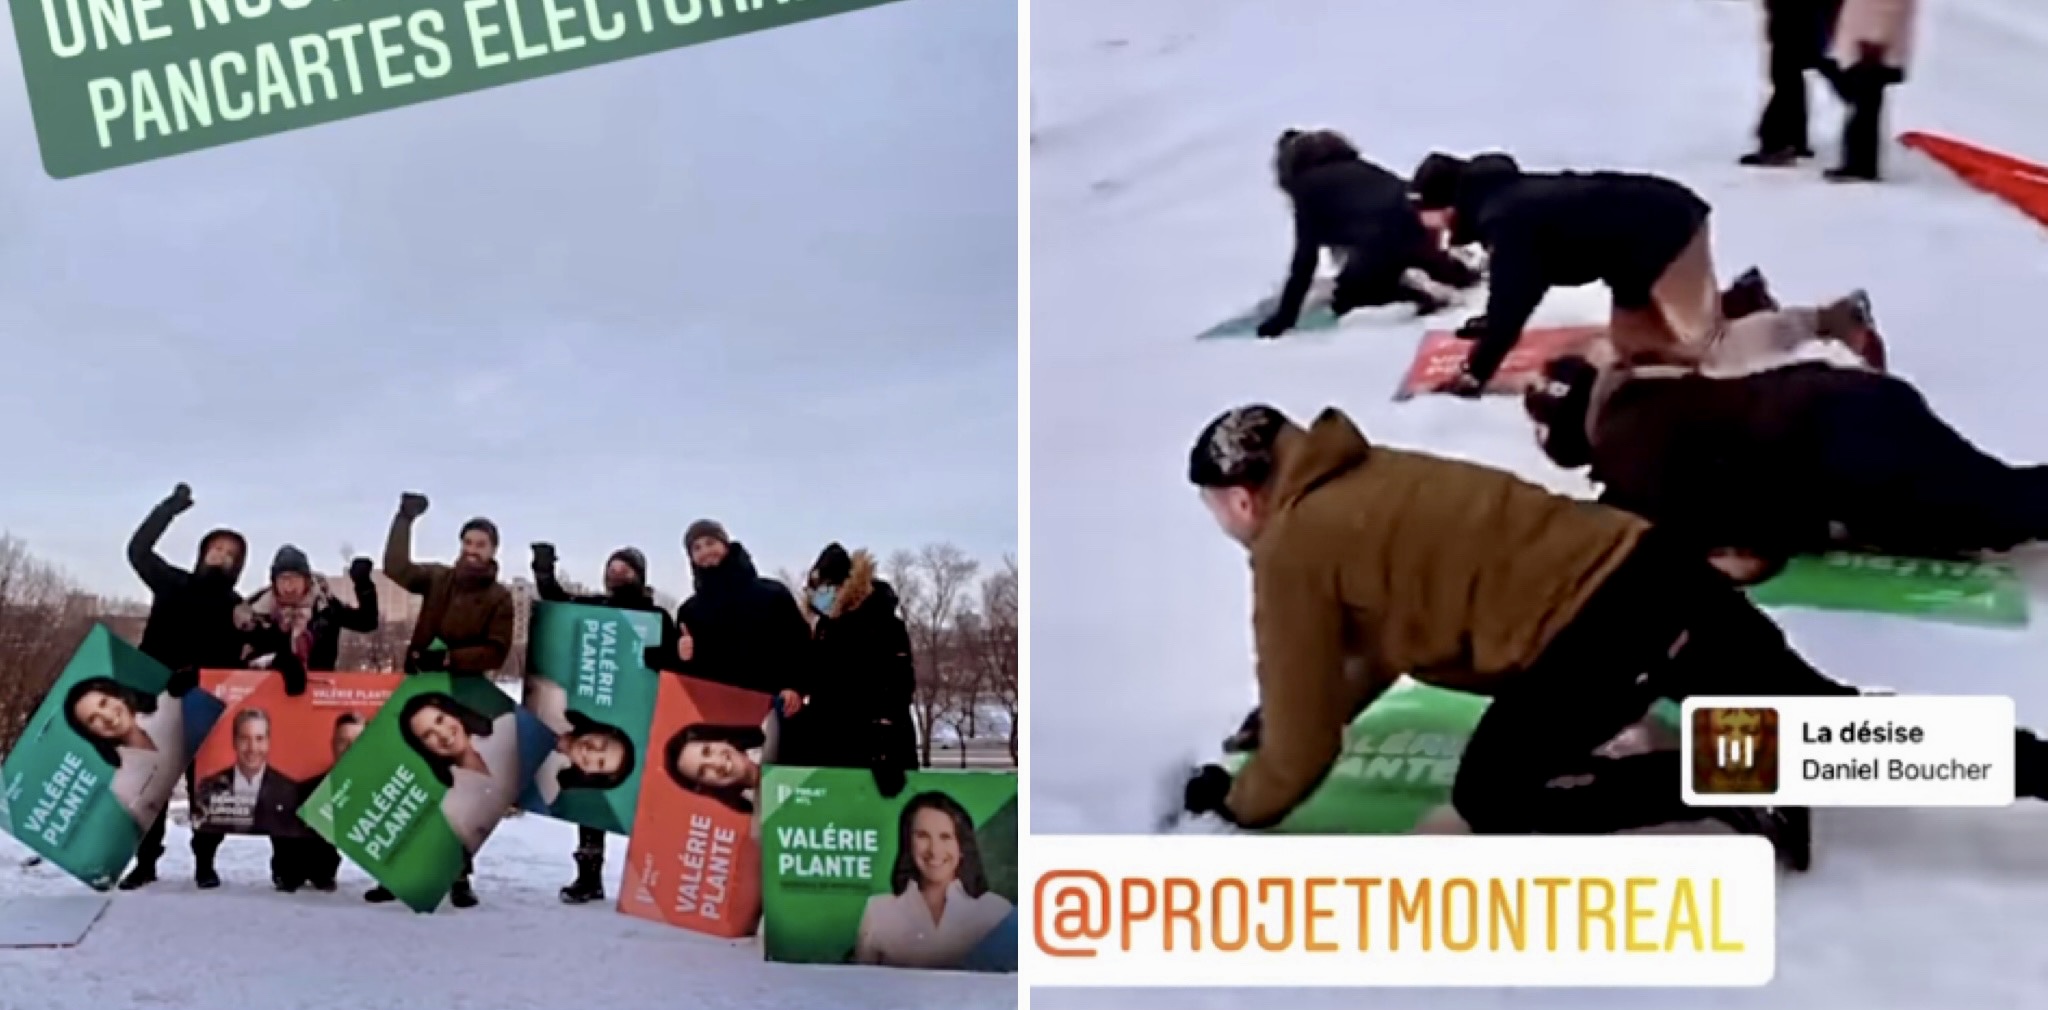 Projet Montréal election signs sledding Mount Royal